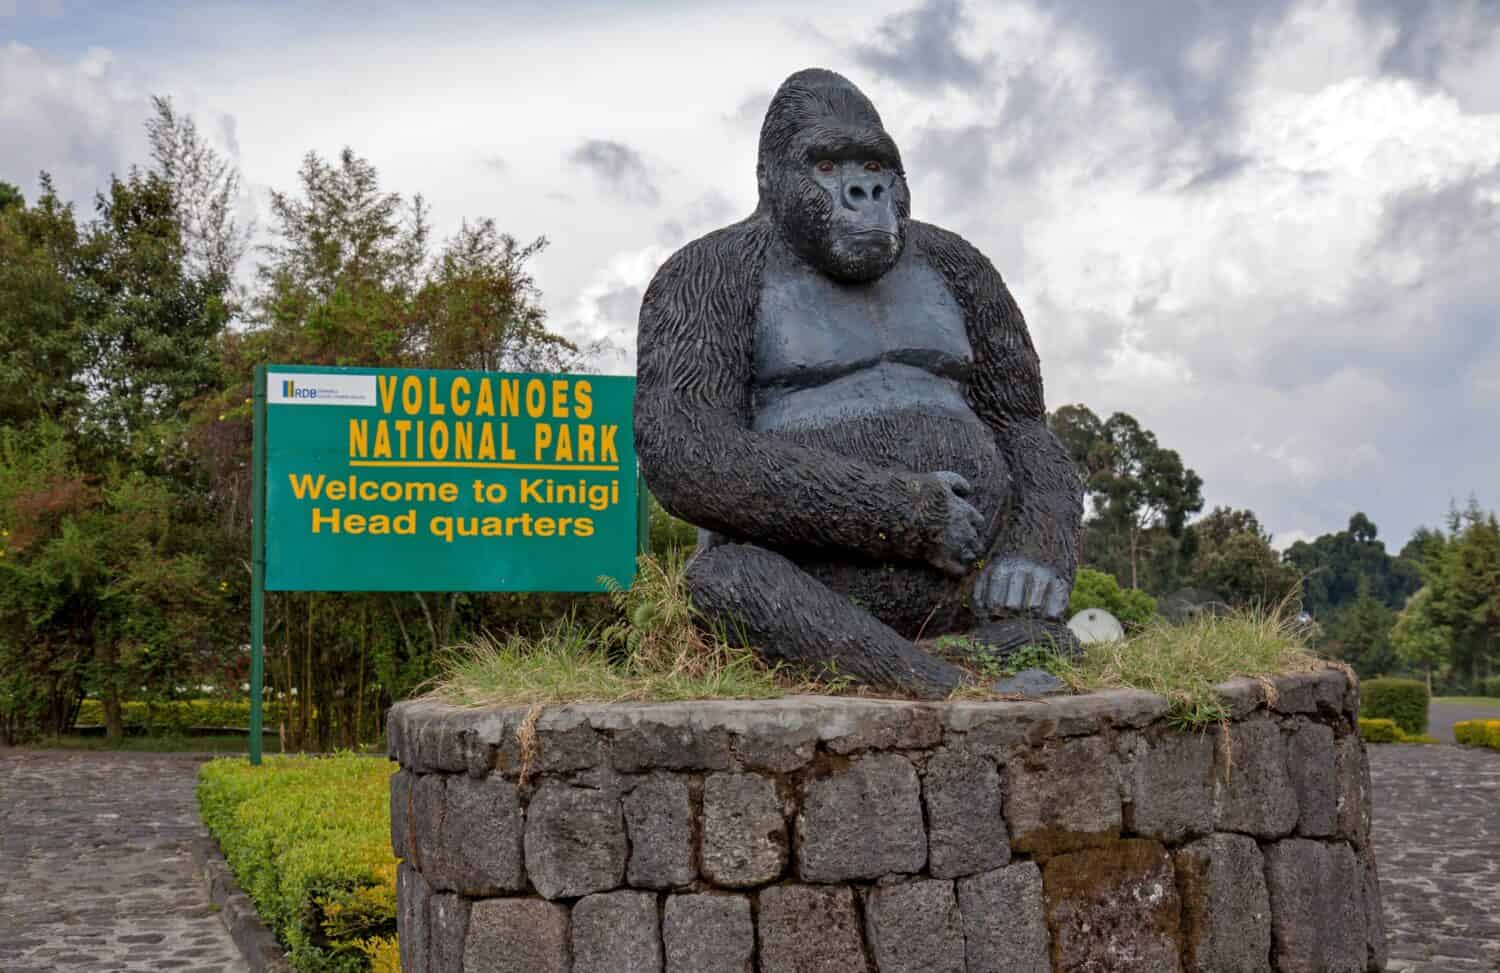 Statue of a mountain gorilla at the entrance of volcanoes national park in Kinigi, Rwanda